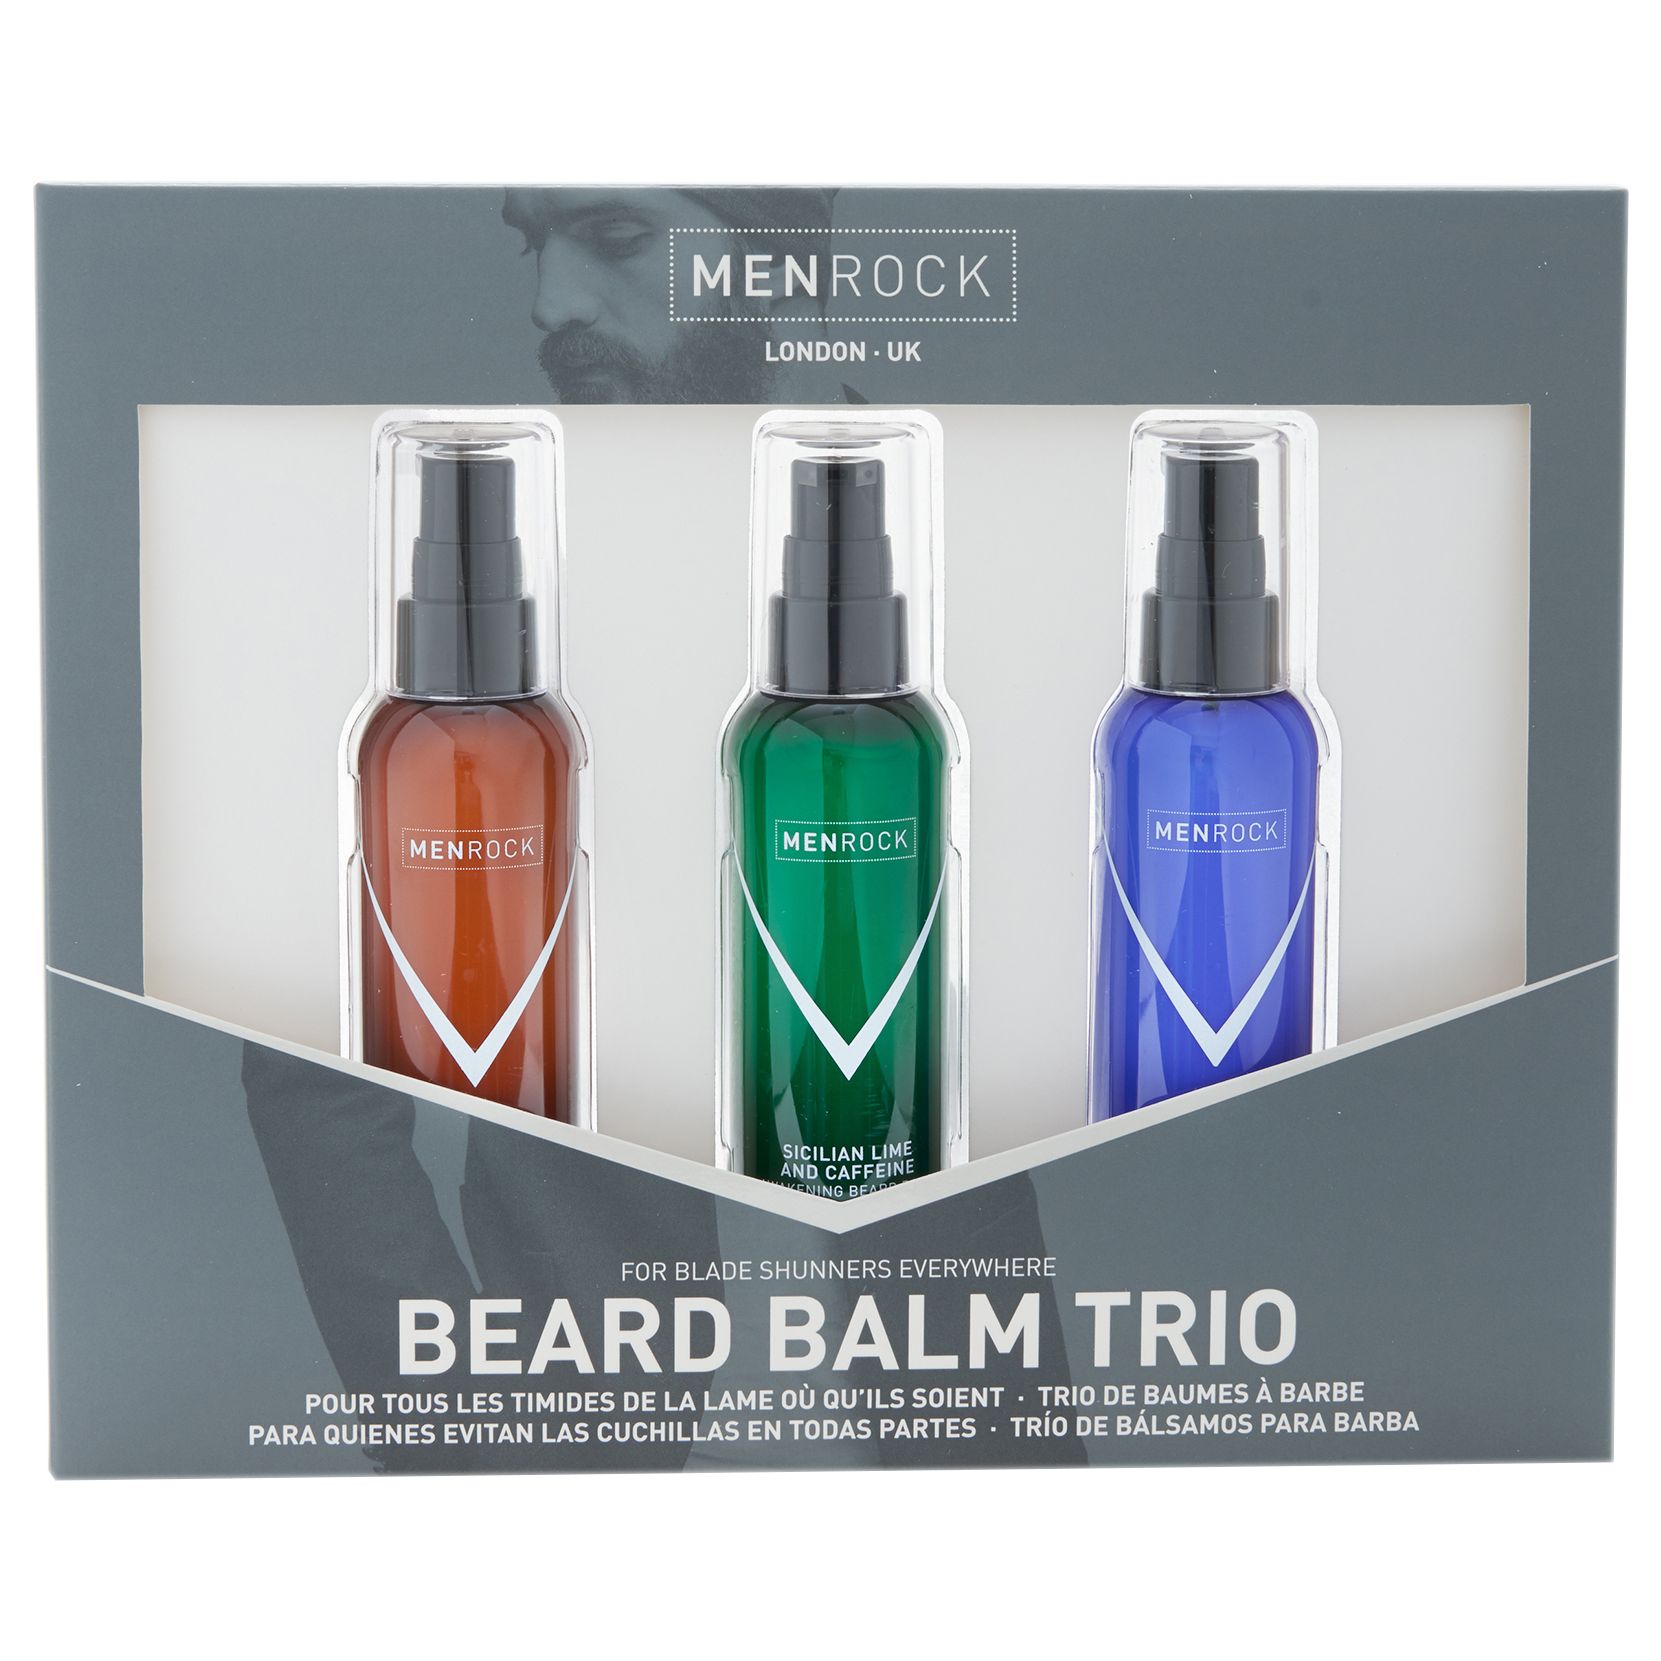 Men Rock Beard Balm Trio Review